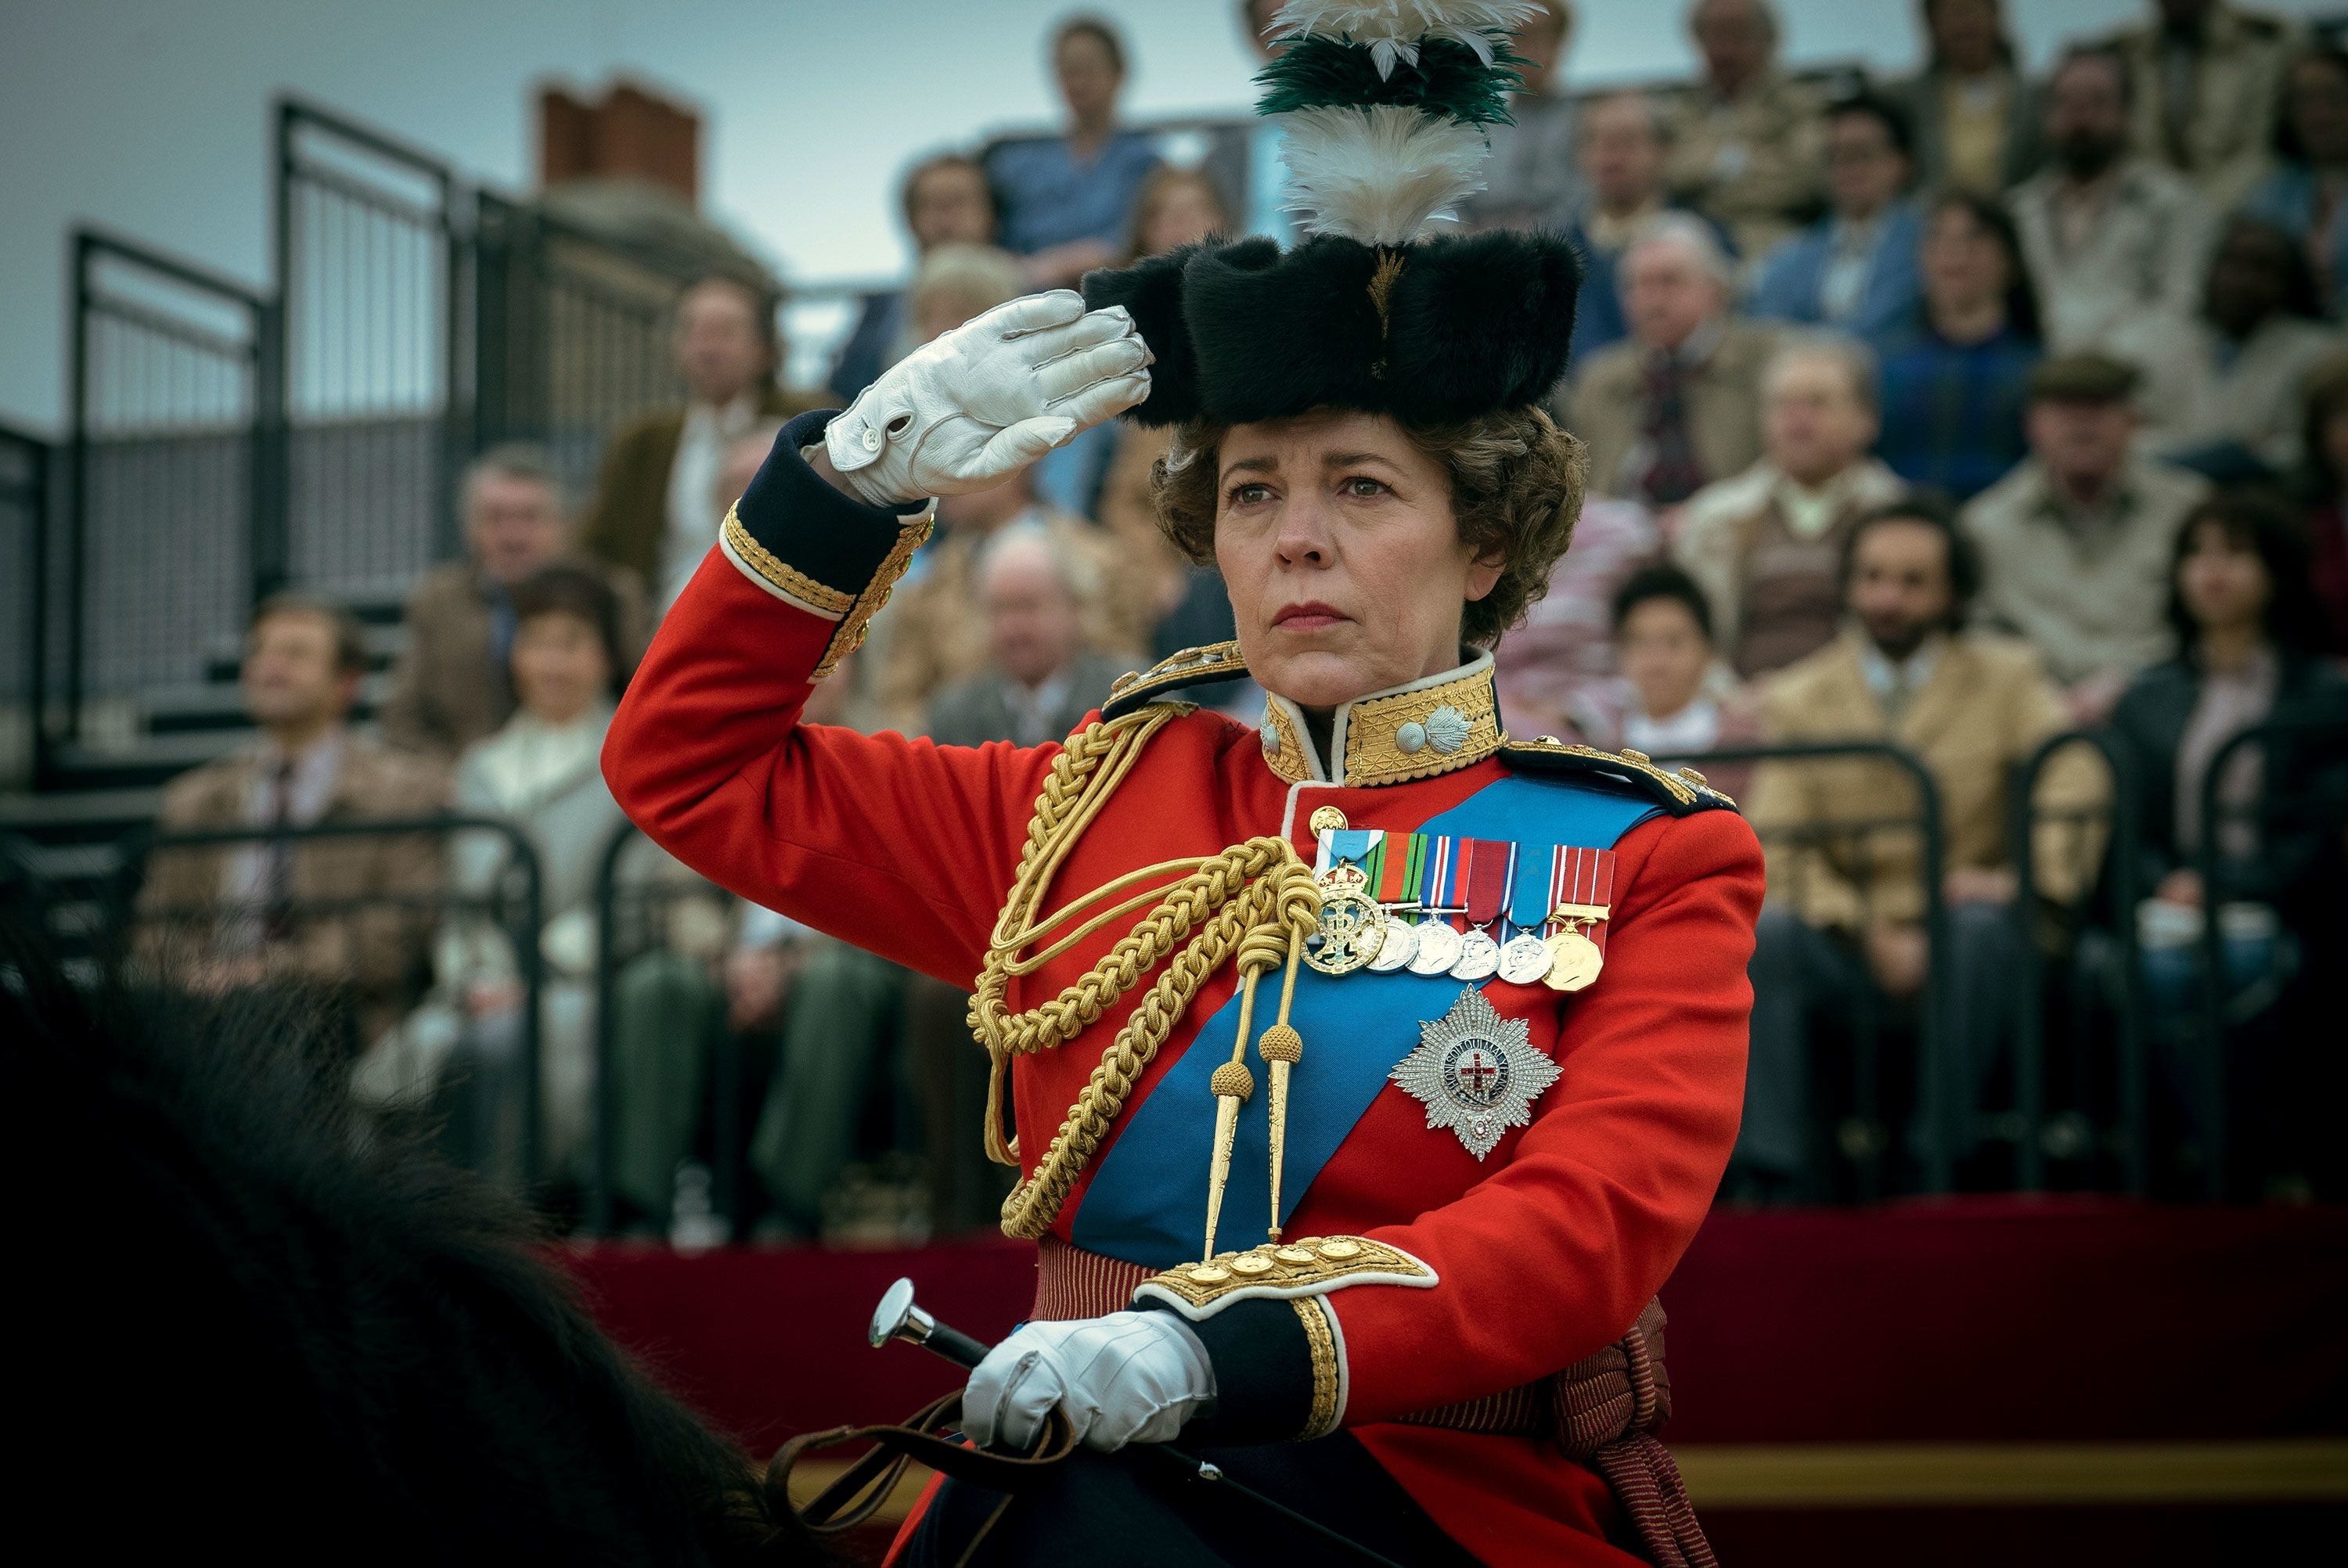 The Crown Queen Elizabeth saluting on horseback